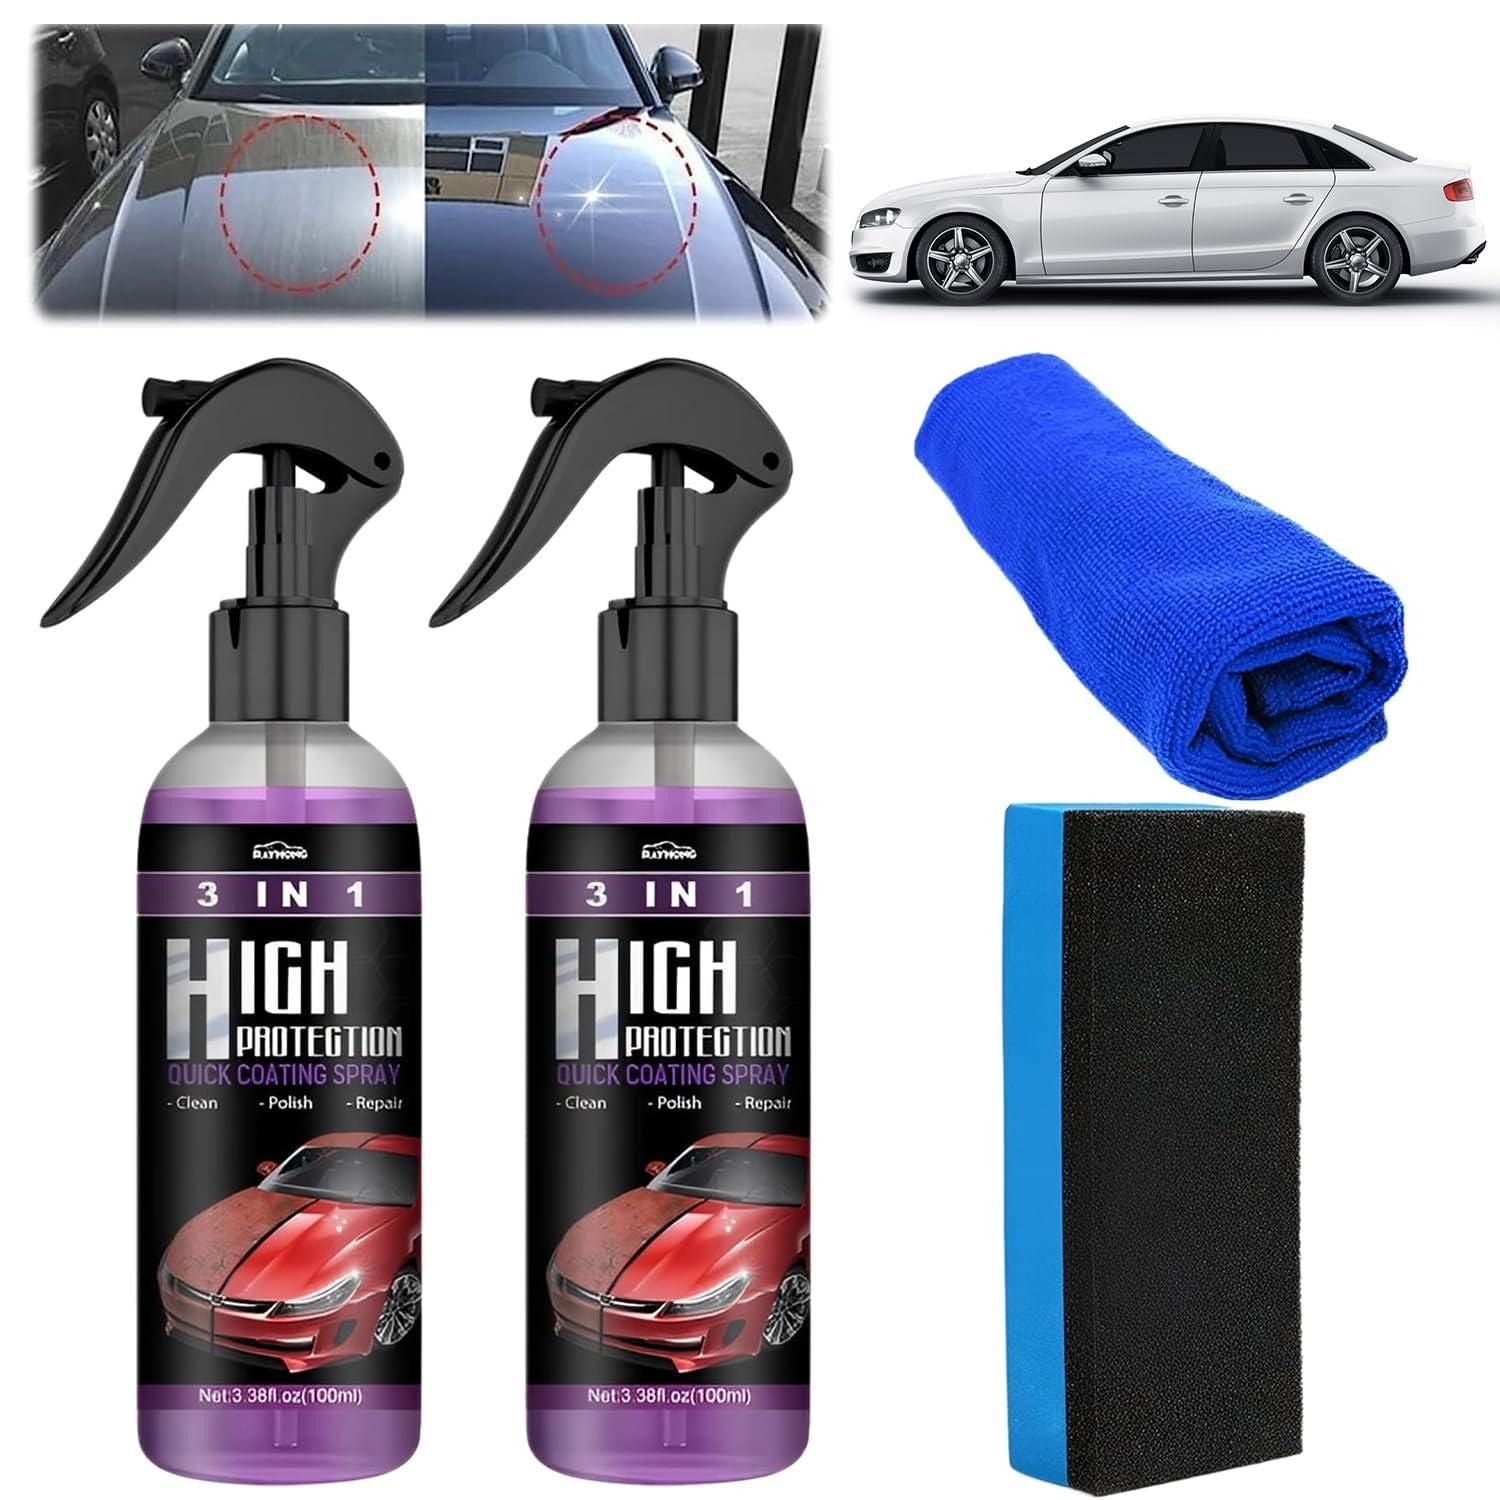 3 in 1 Ceramic Car Coating Spray High Protection –